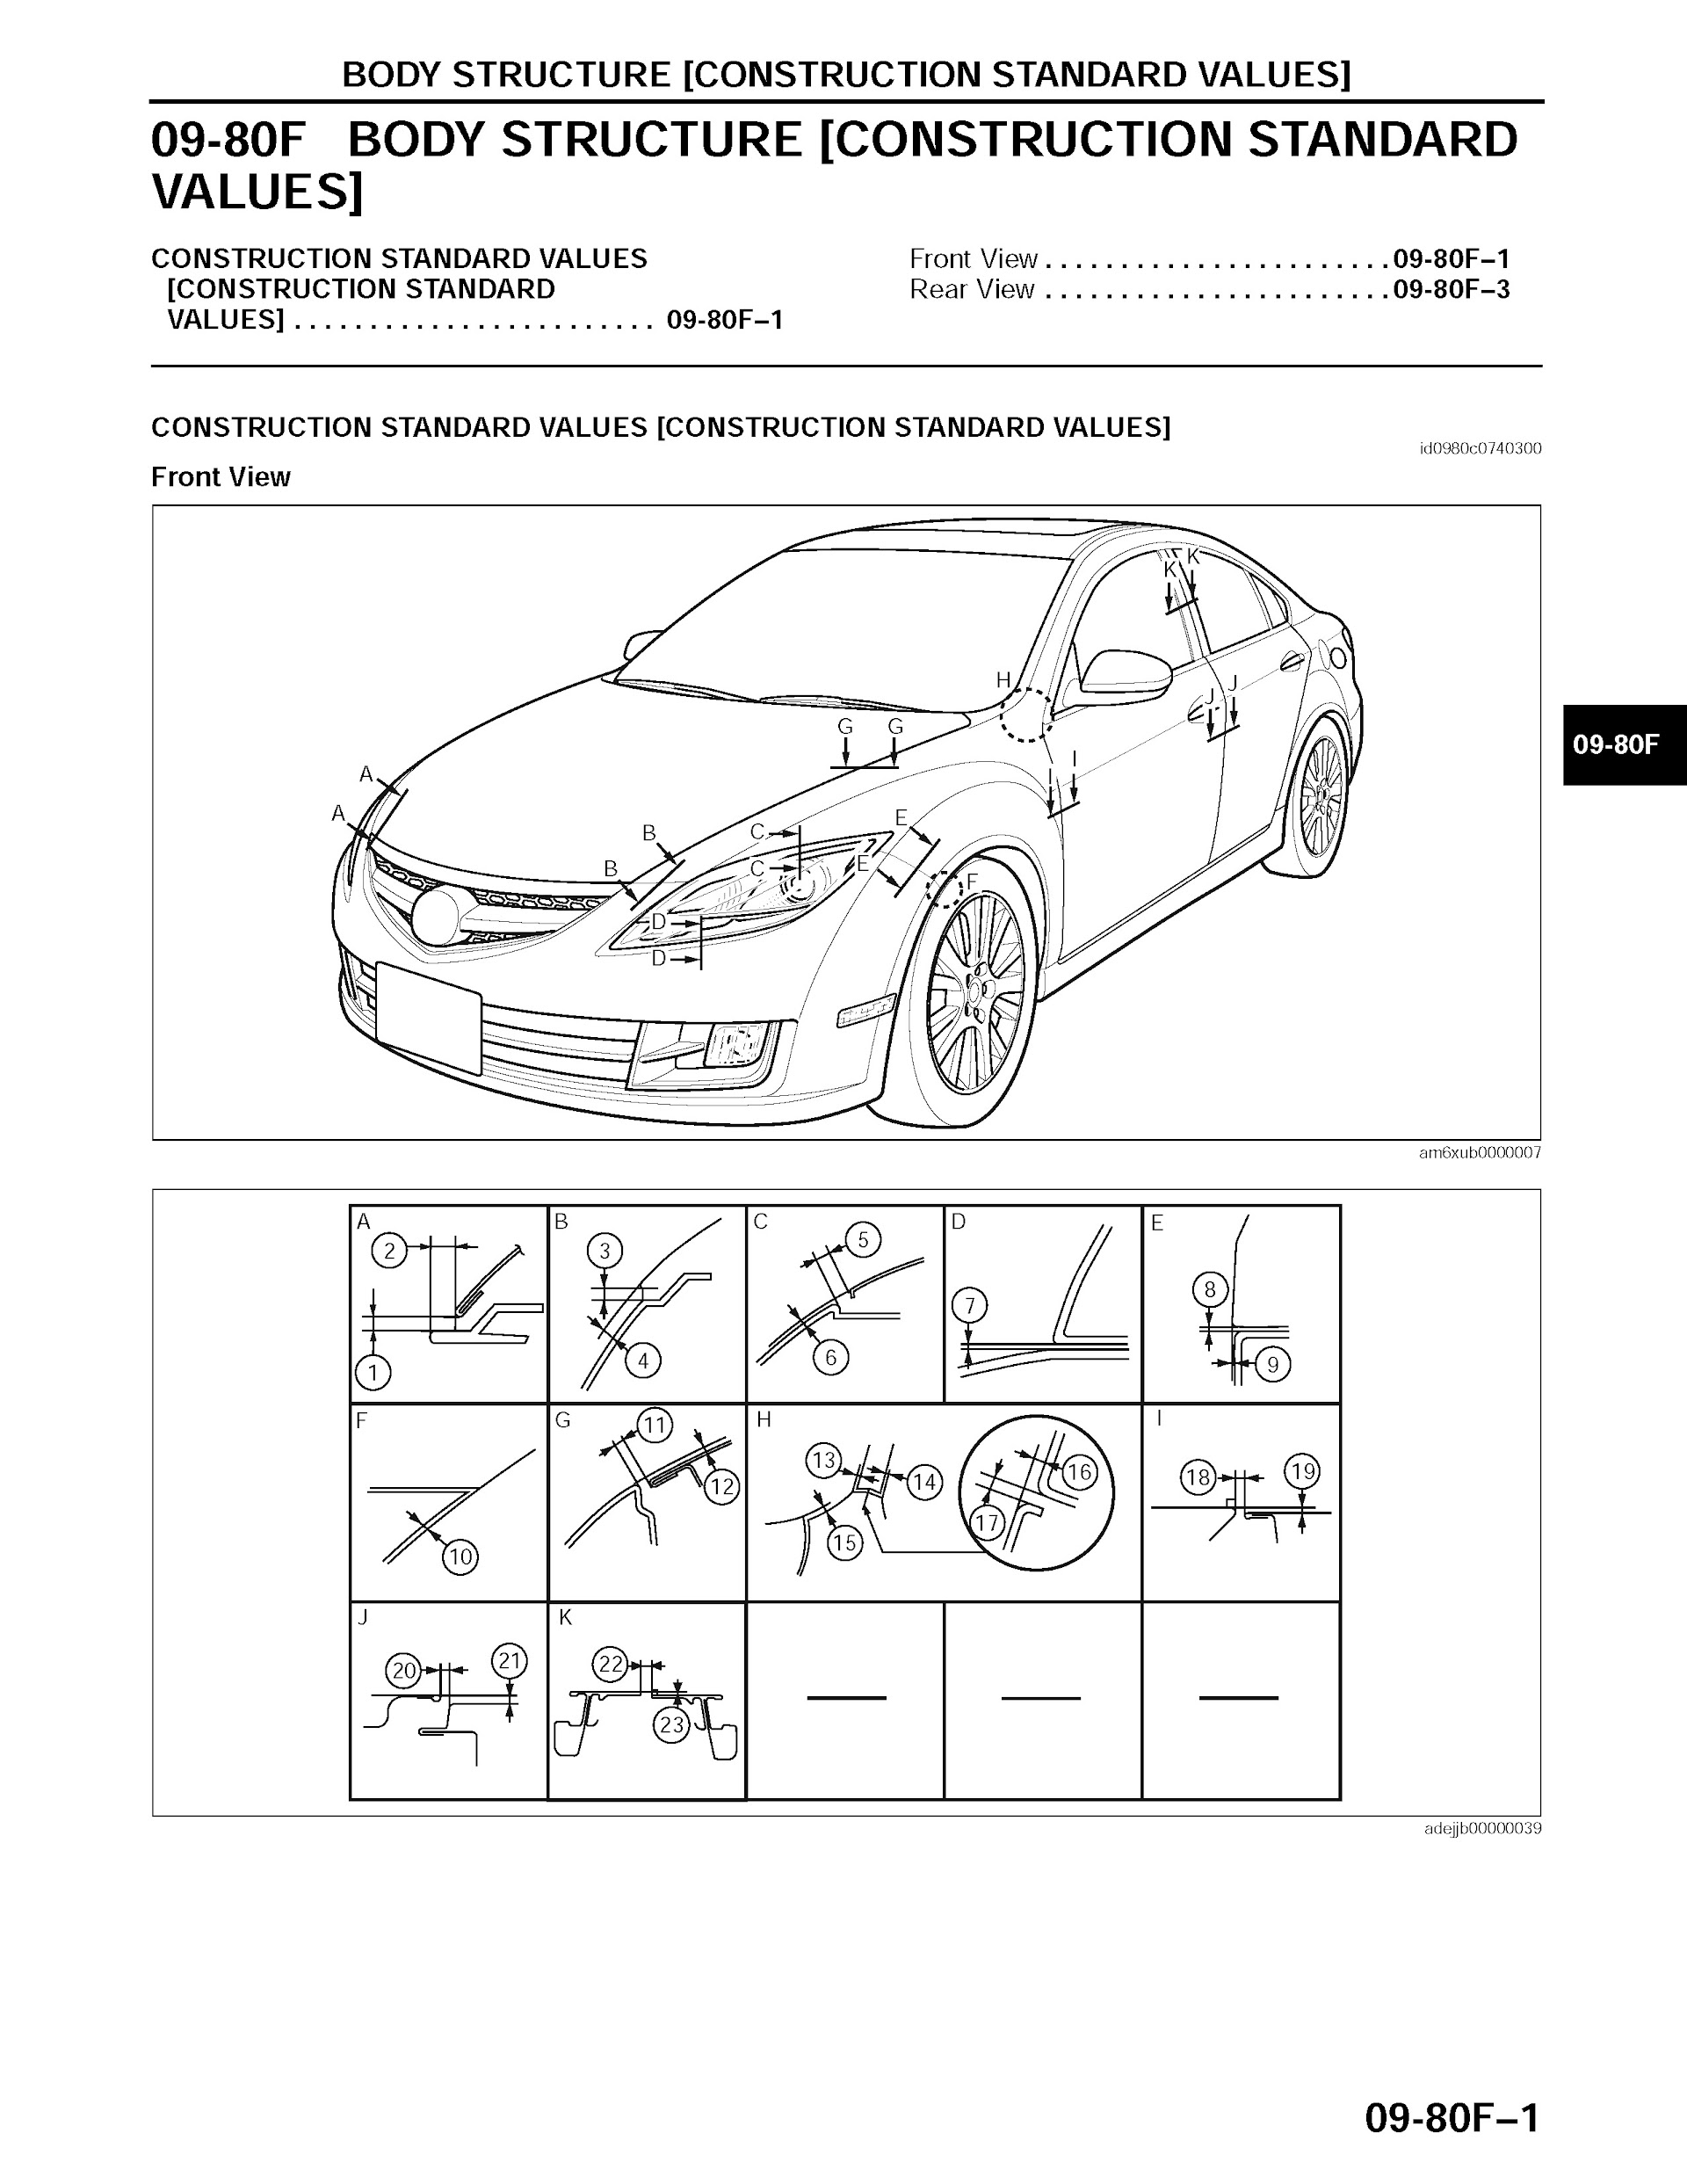 ONTENTS: 2009-2012 Mazda 6 Repair Manual, Body Structure